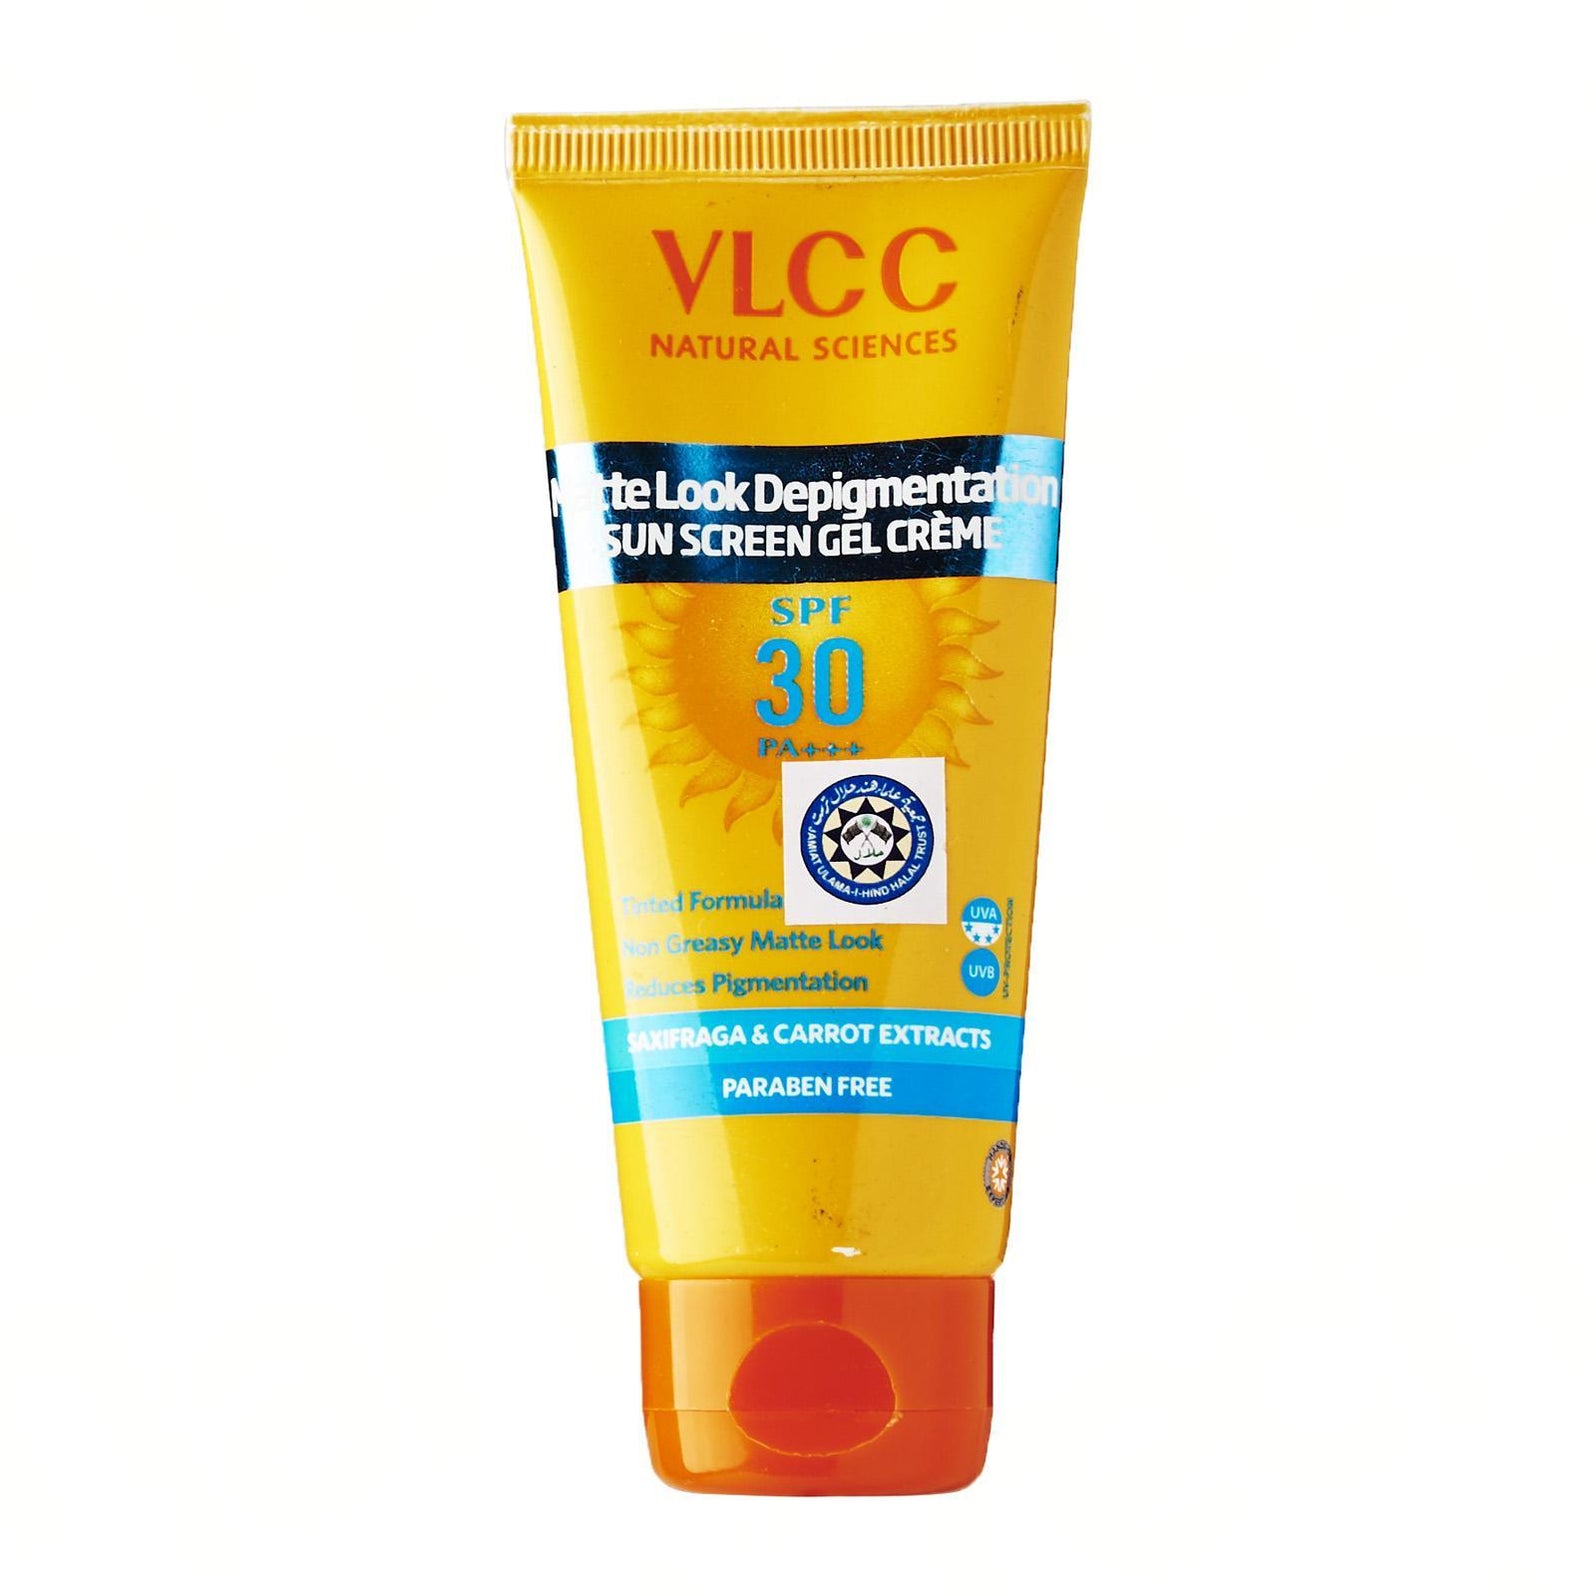 Buy VLCC Matte Look Depigmentation Sunscreen Gel SPF 30 Online ...